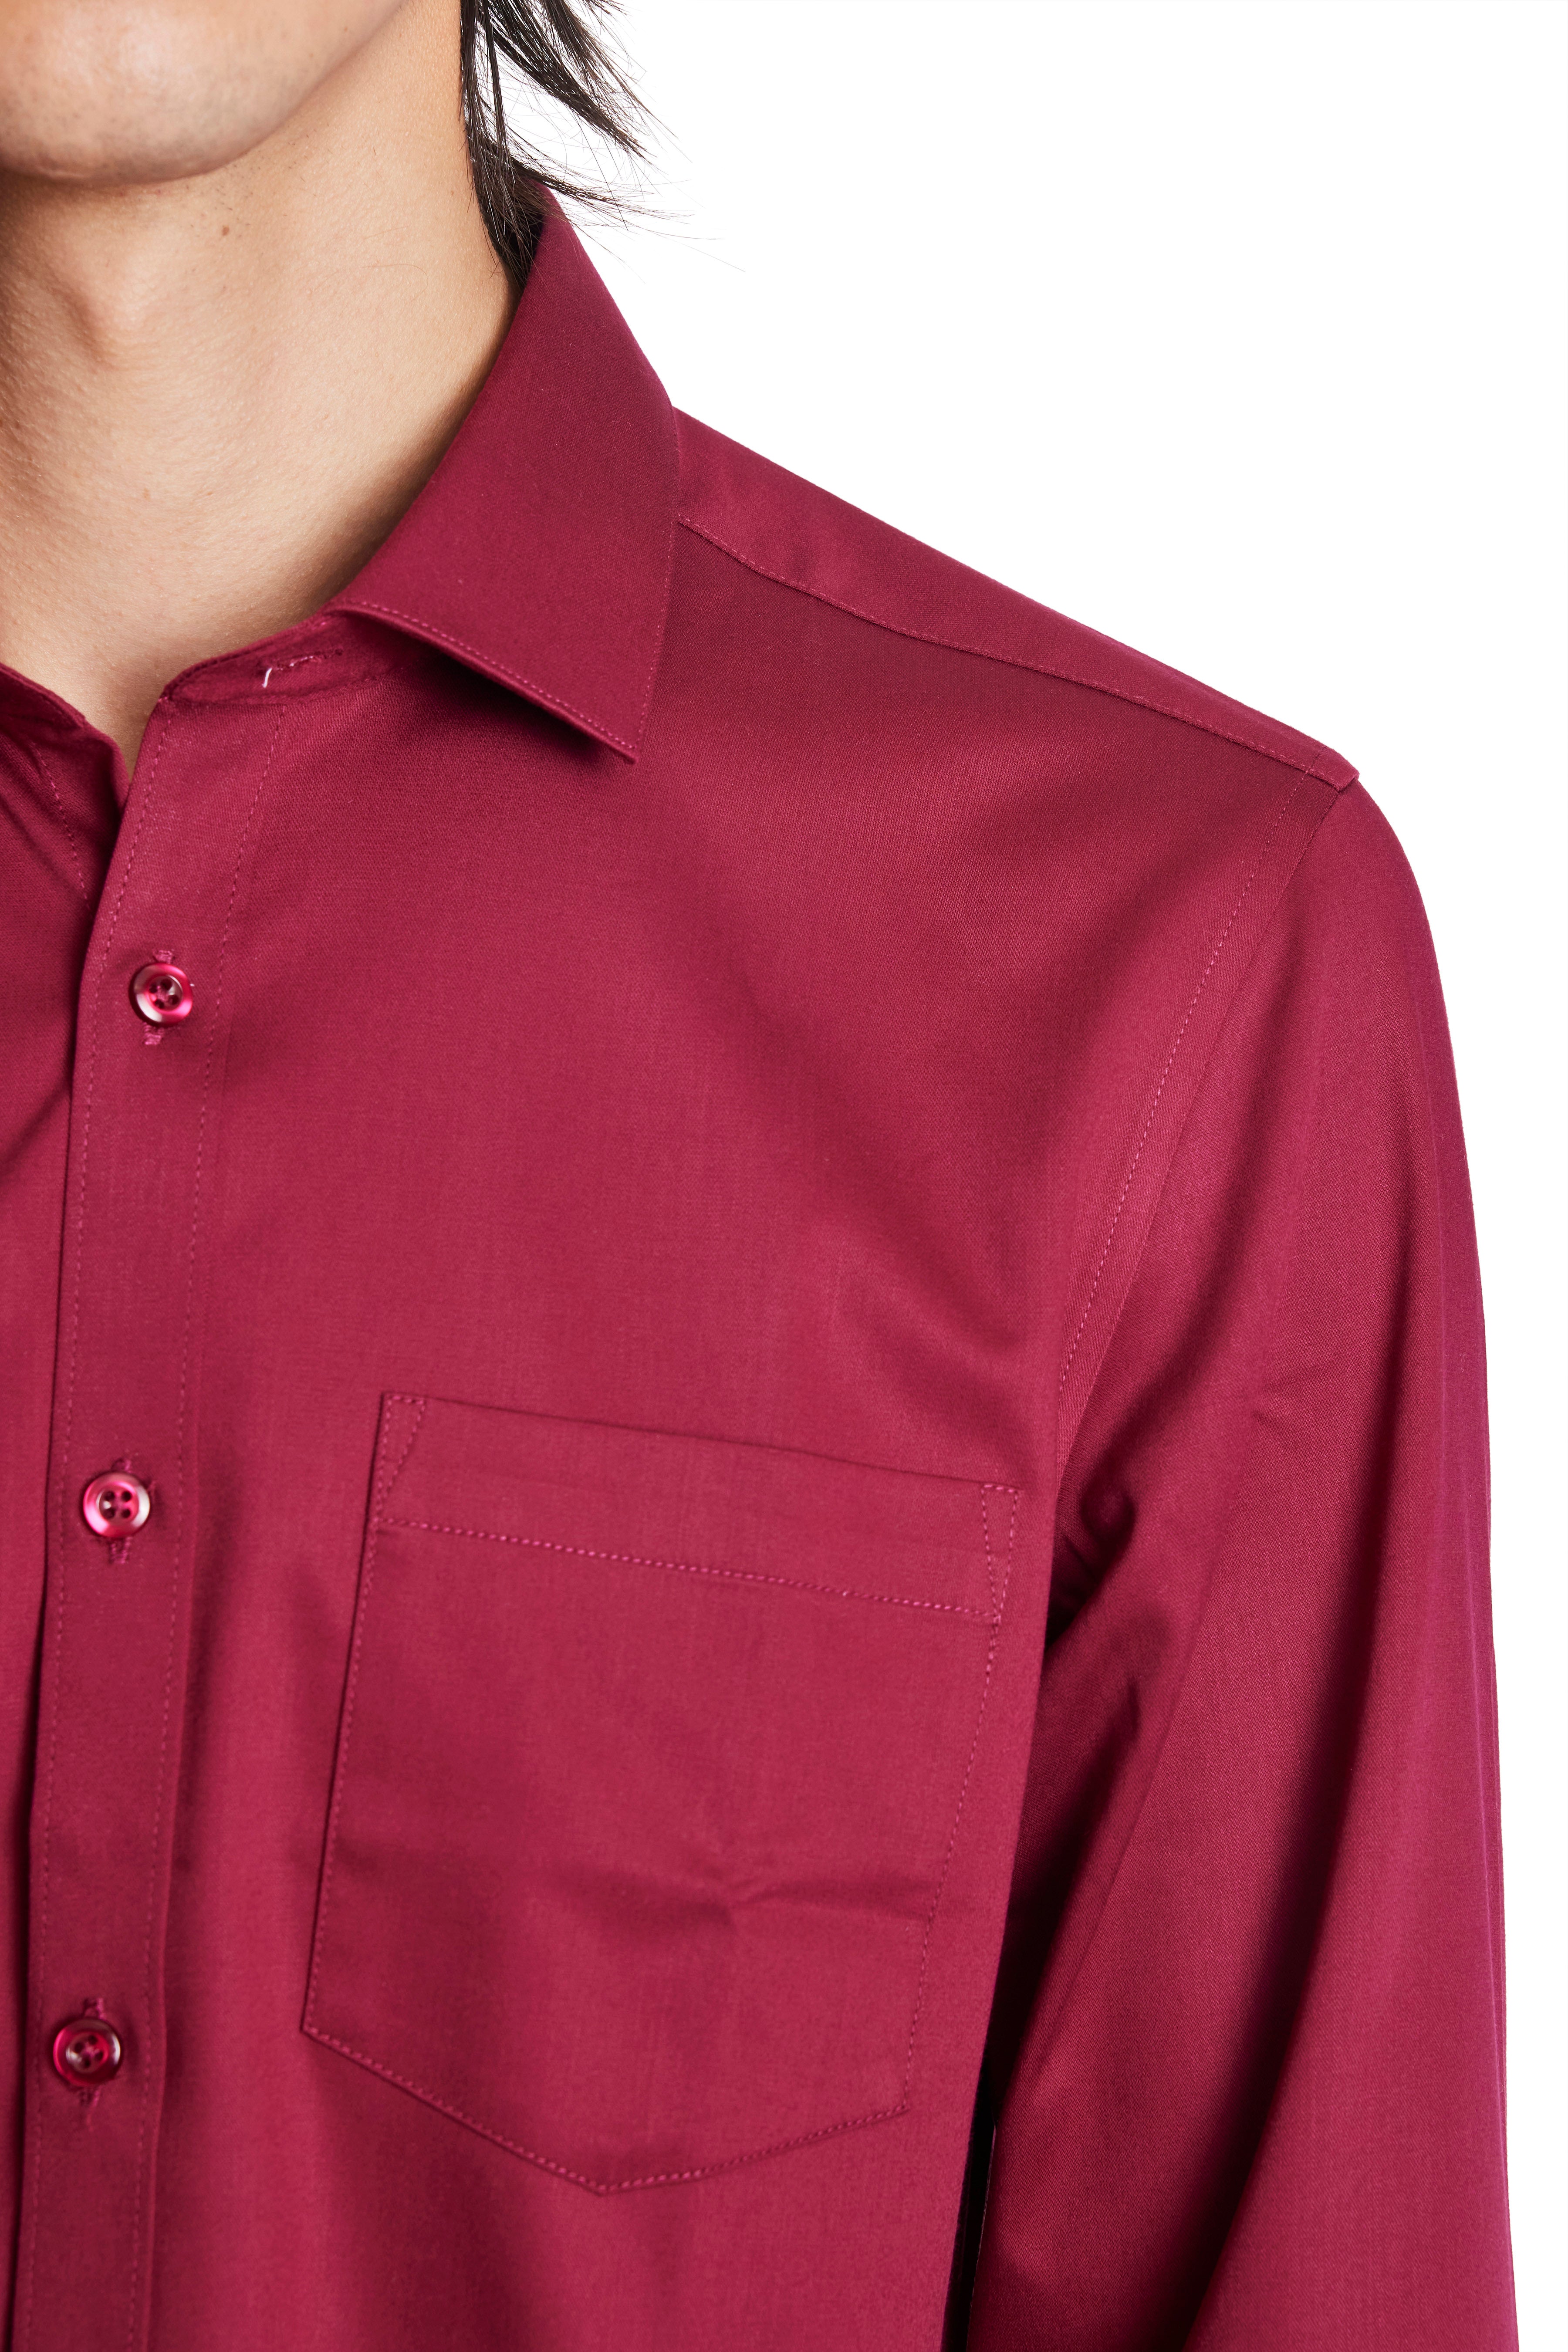 Samuel Spread Collar Shirt - Cranberry